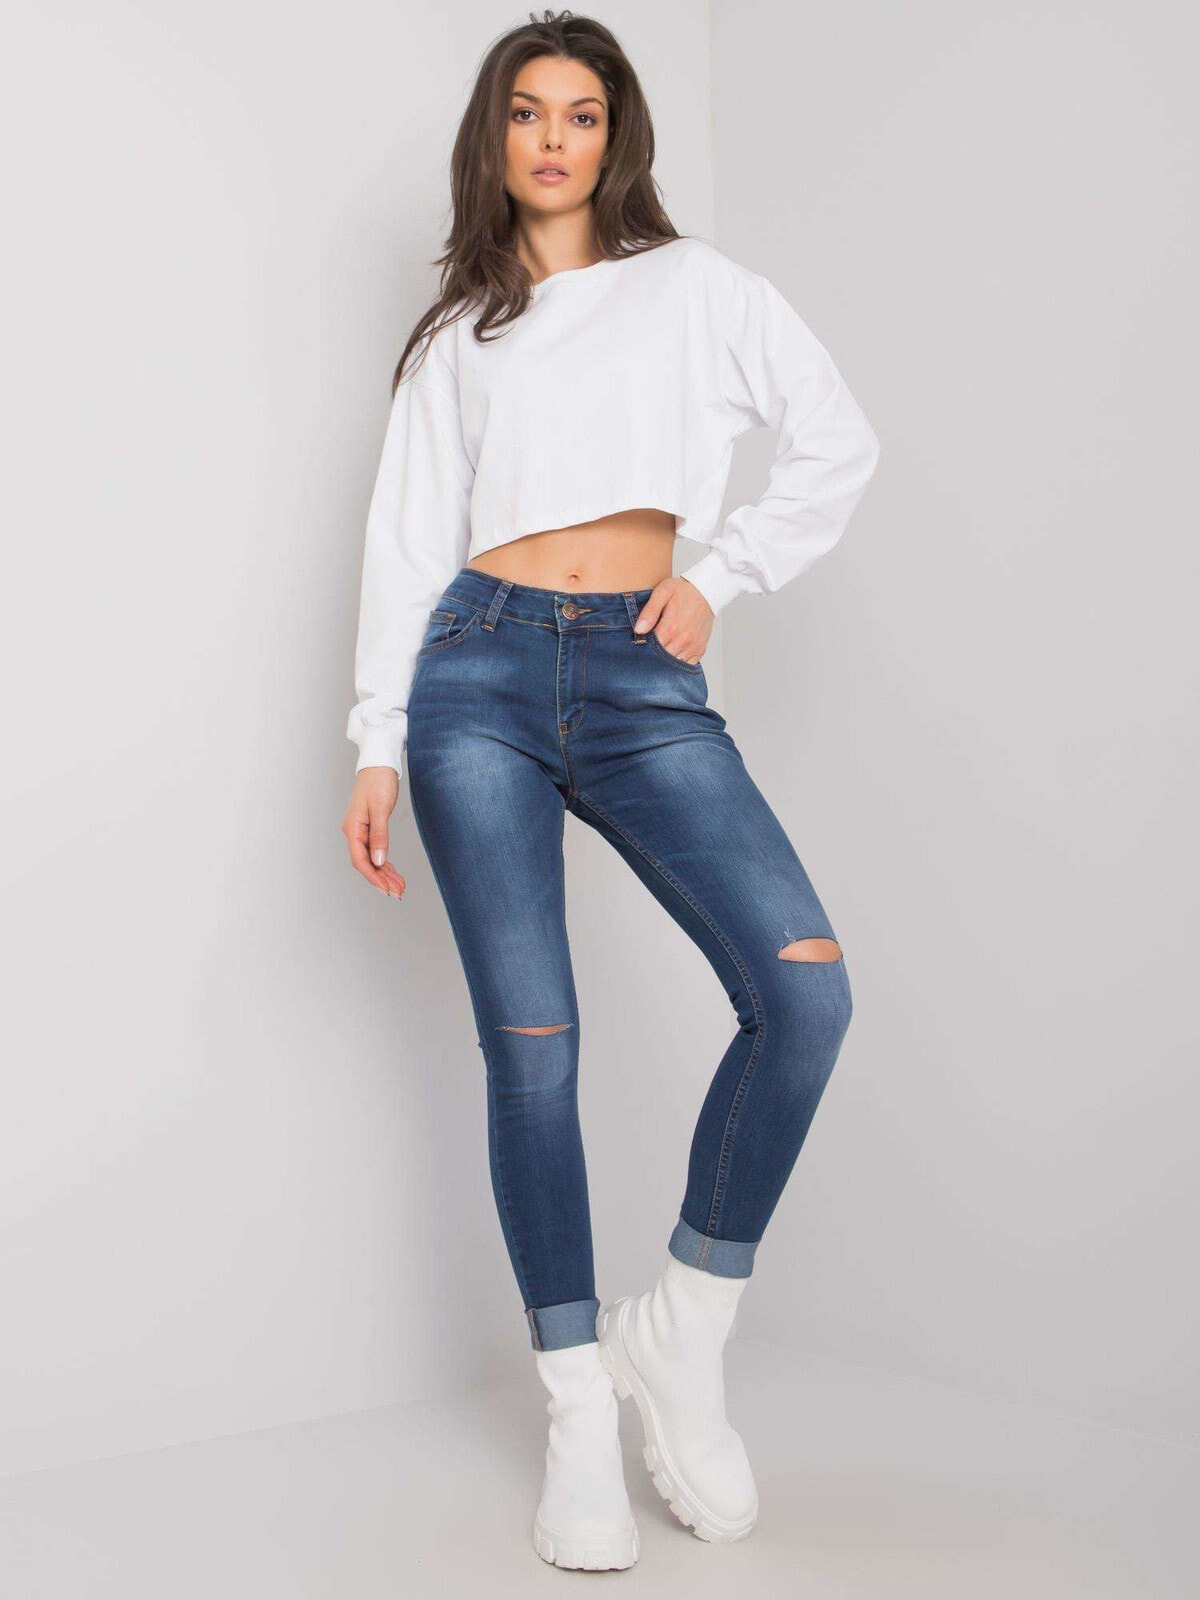 Женские джинсы Factory Price Spodnie jeans-RS-SP-G-004.84-ciemny niebieski